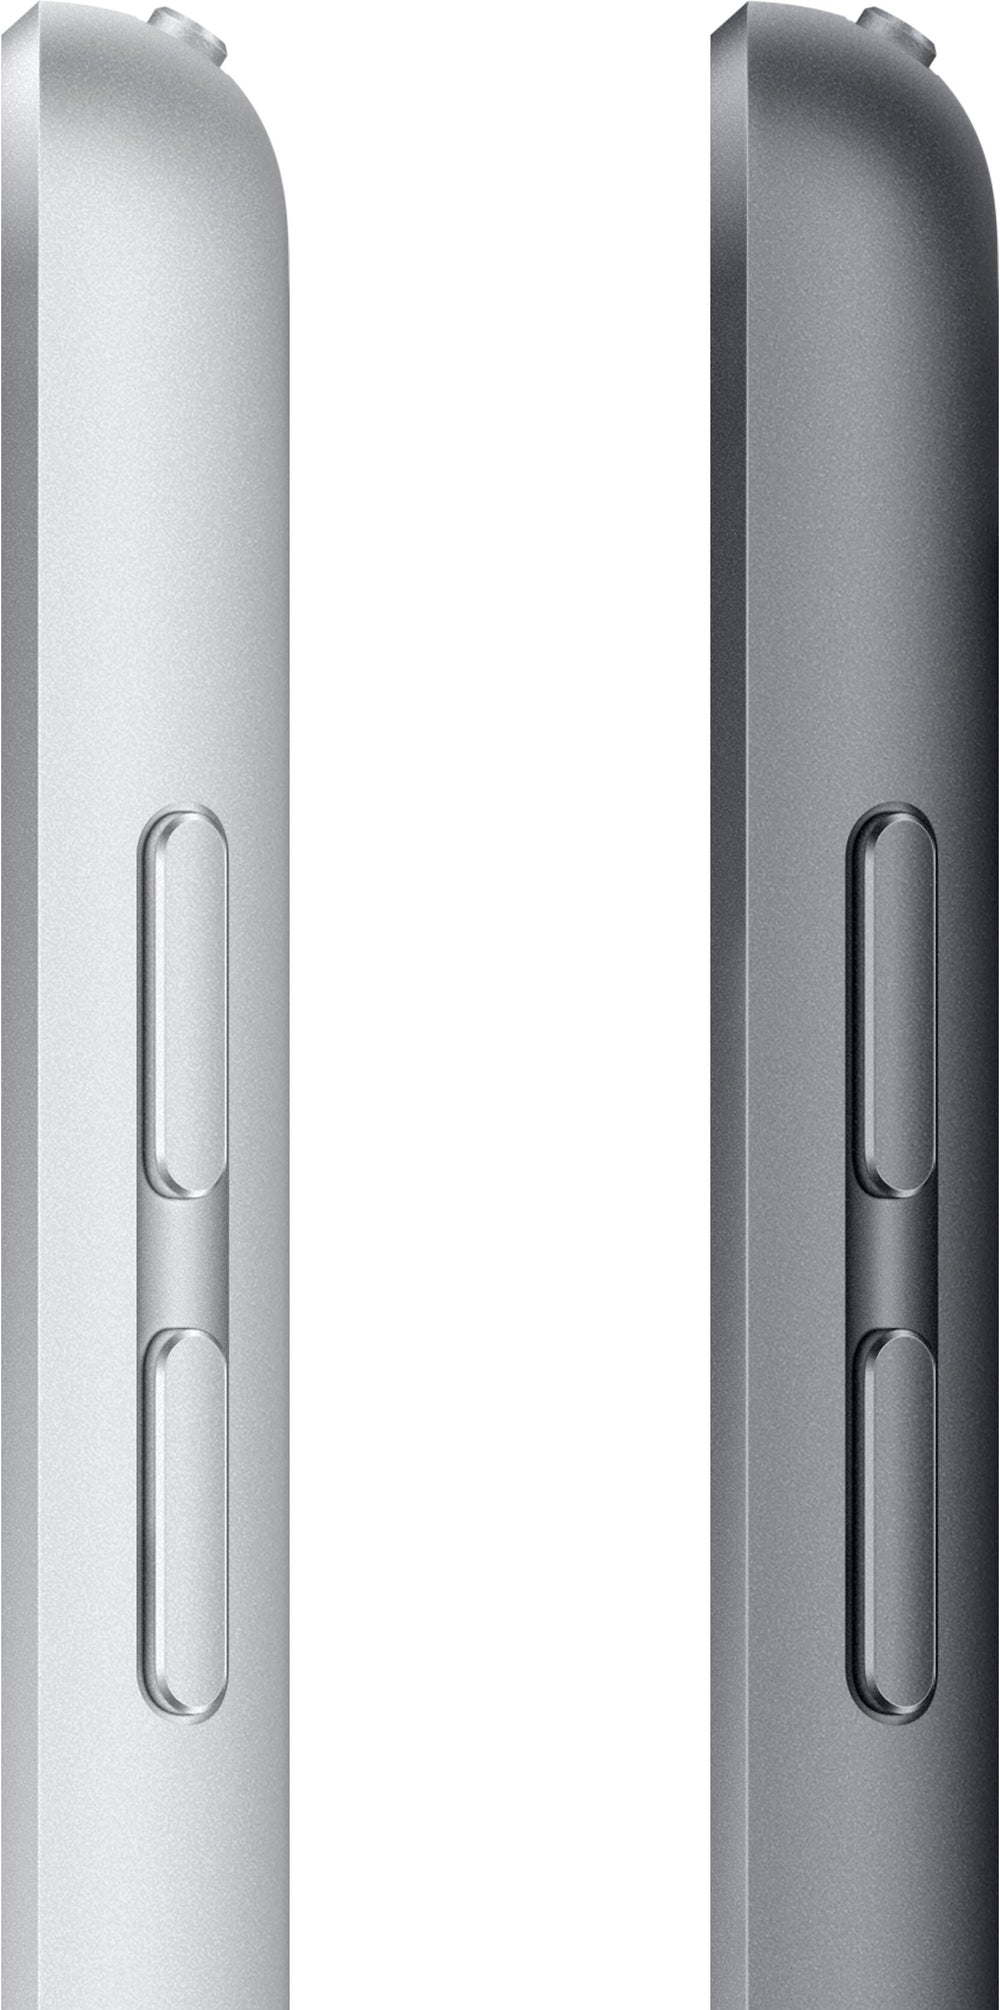 Apple - 10.2-Inch iPad (Latest Model) with Wi-Fi + Cellular - 256GB - Silver (Unlocked)_1